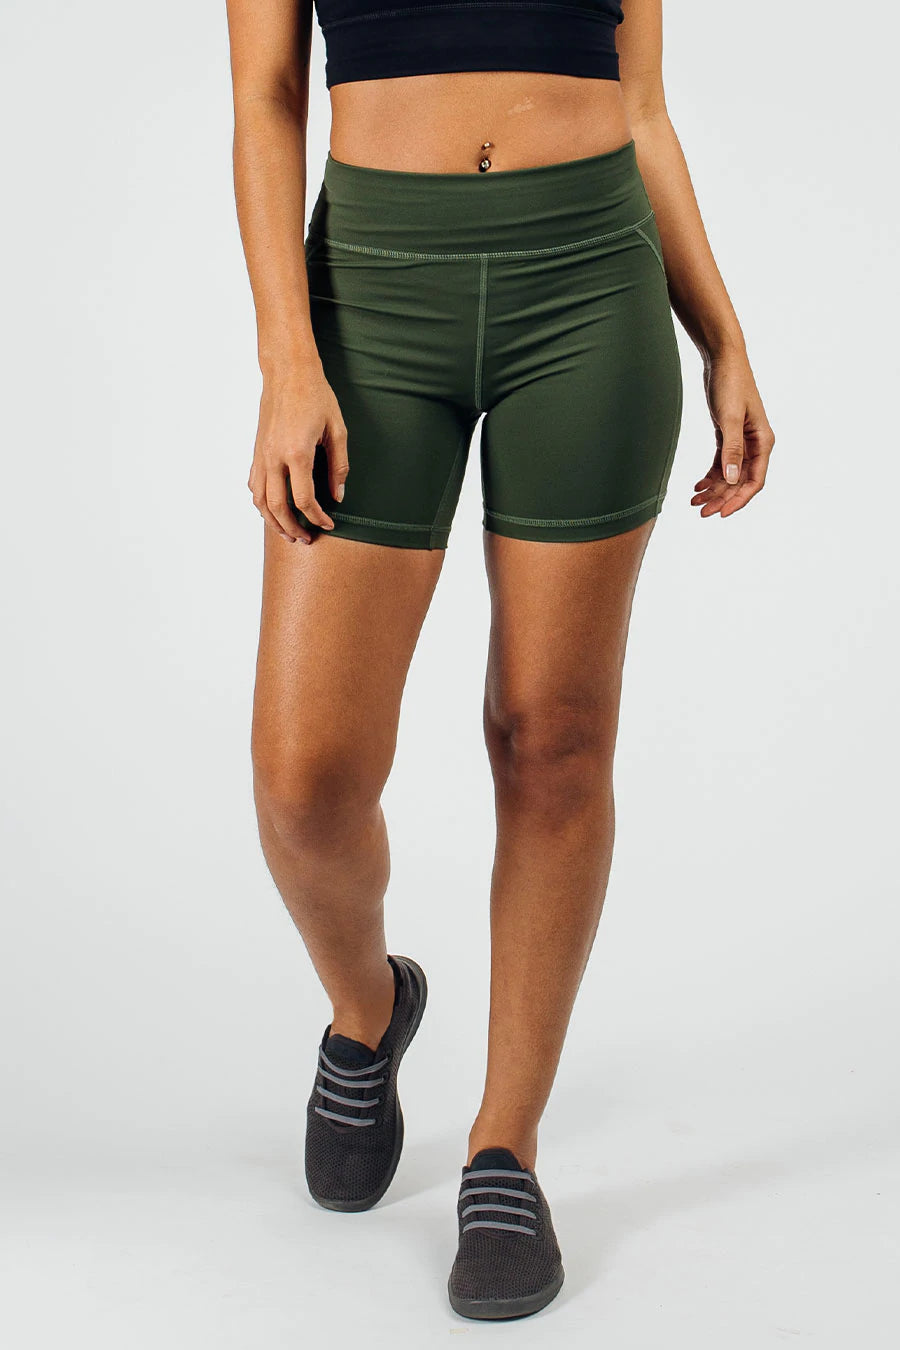 Barbell Apparel Women's Stayput Shorts